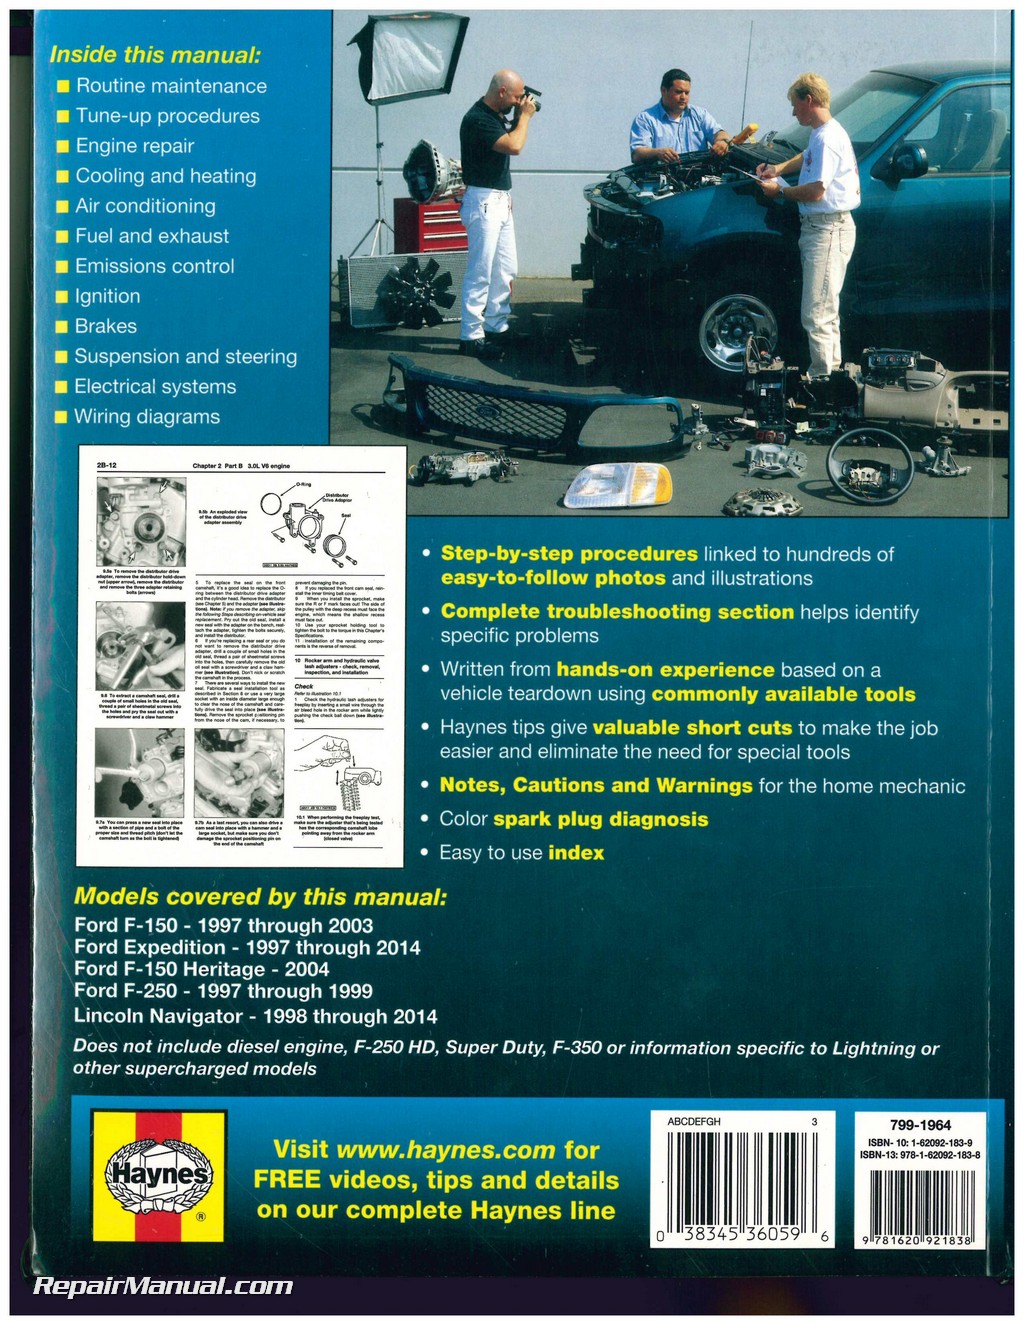 1997 Ford f150 haynes manual #5